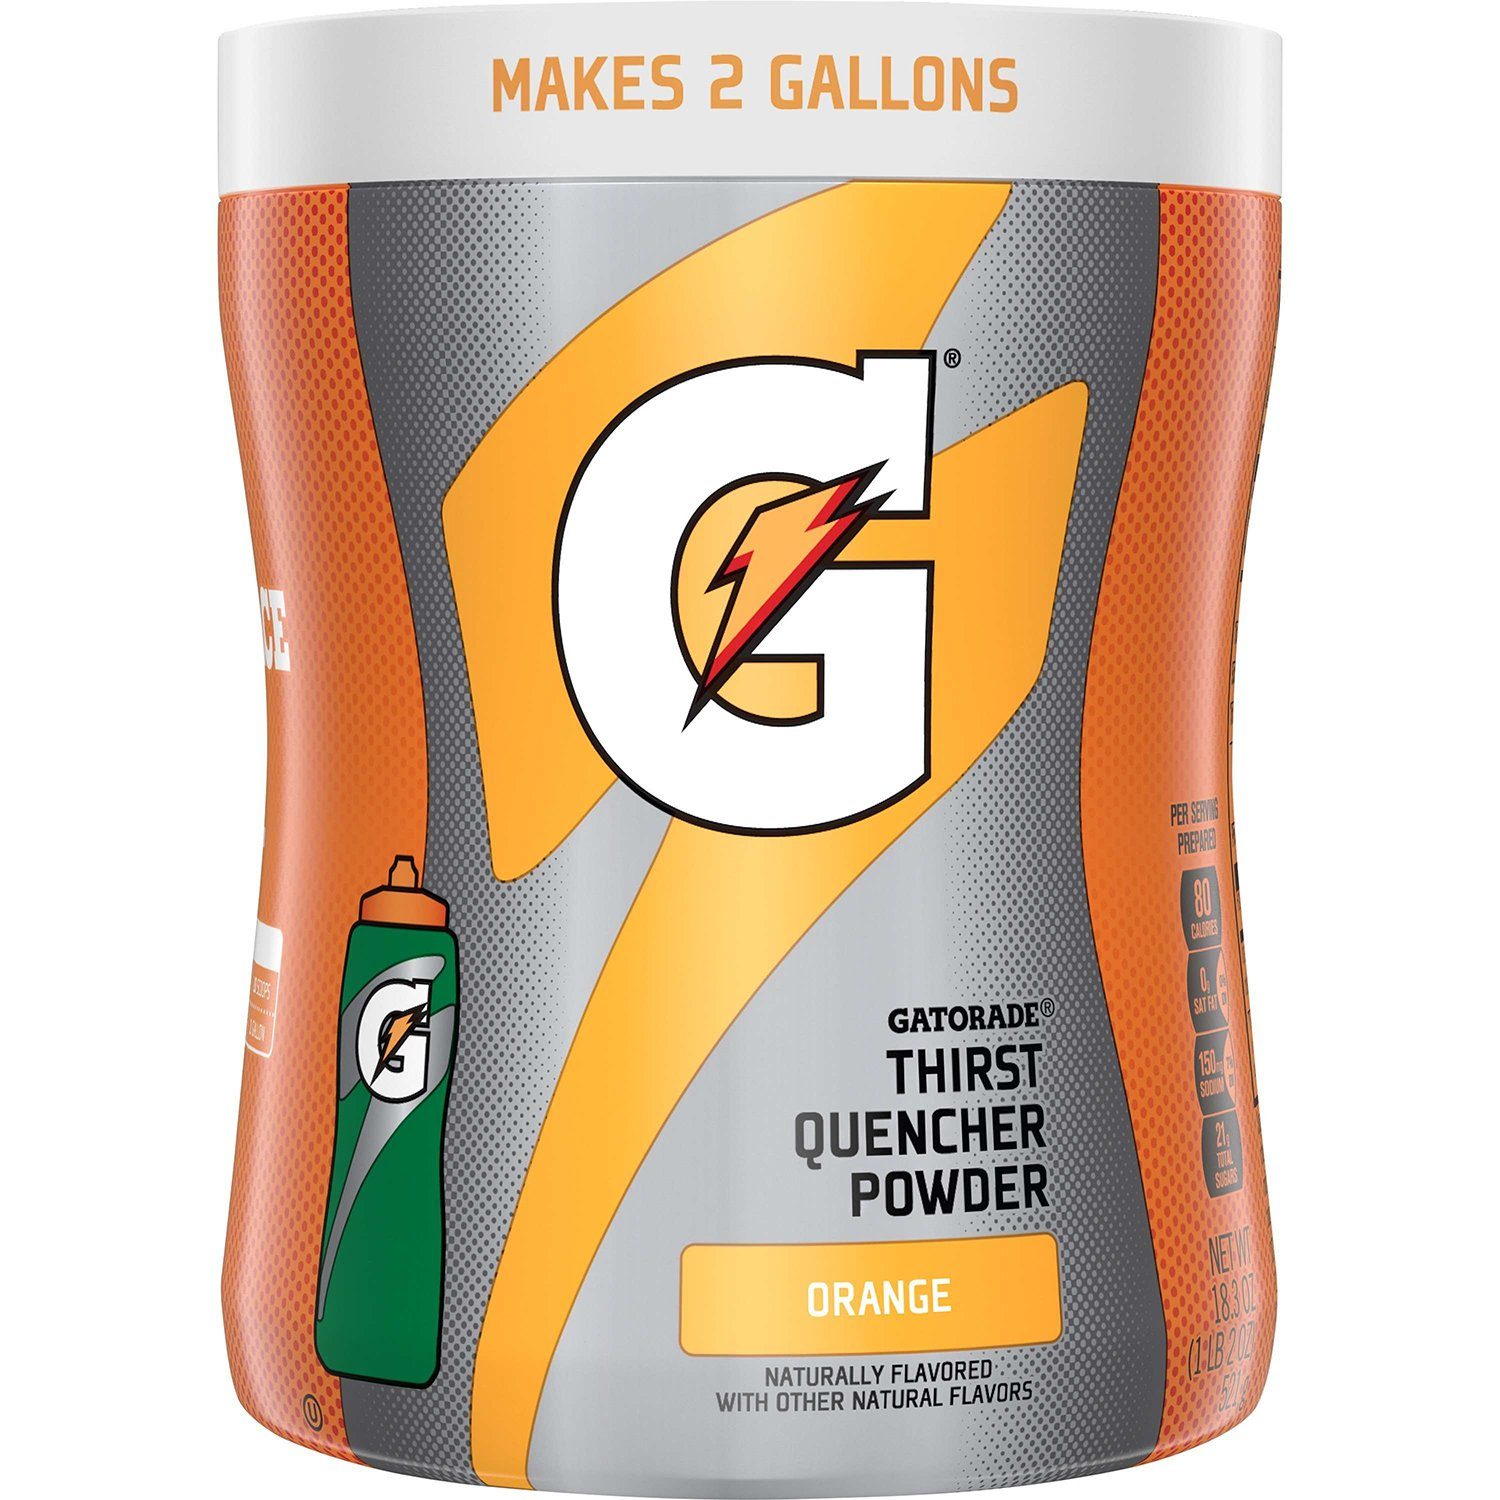 Gatorade Thirst Quencher Powder Packs Gatorade Orange 18.3 Ounce 